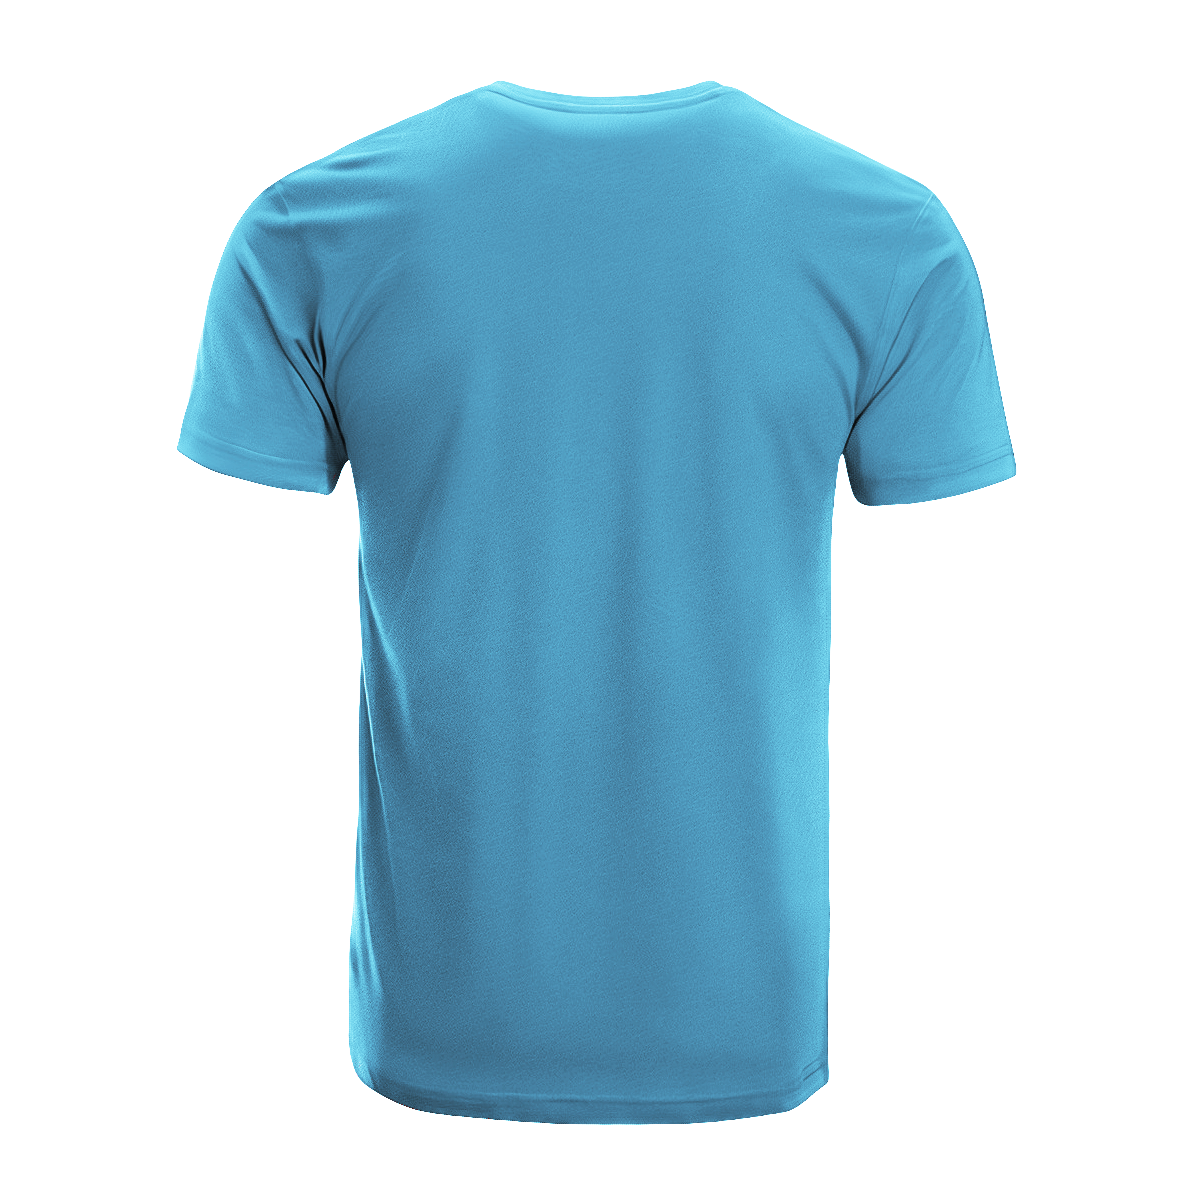 Thomson Tartan Crest T-shirt - I'm not yelling style